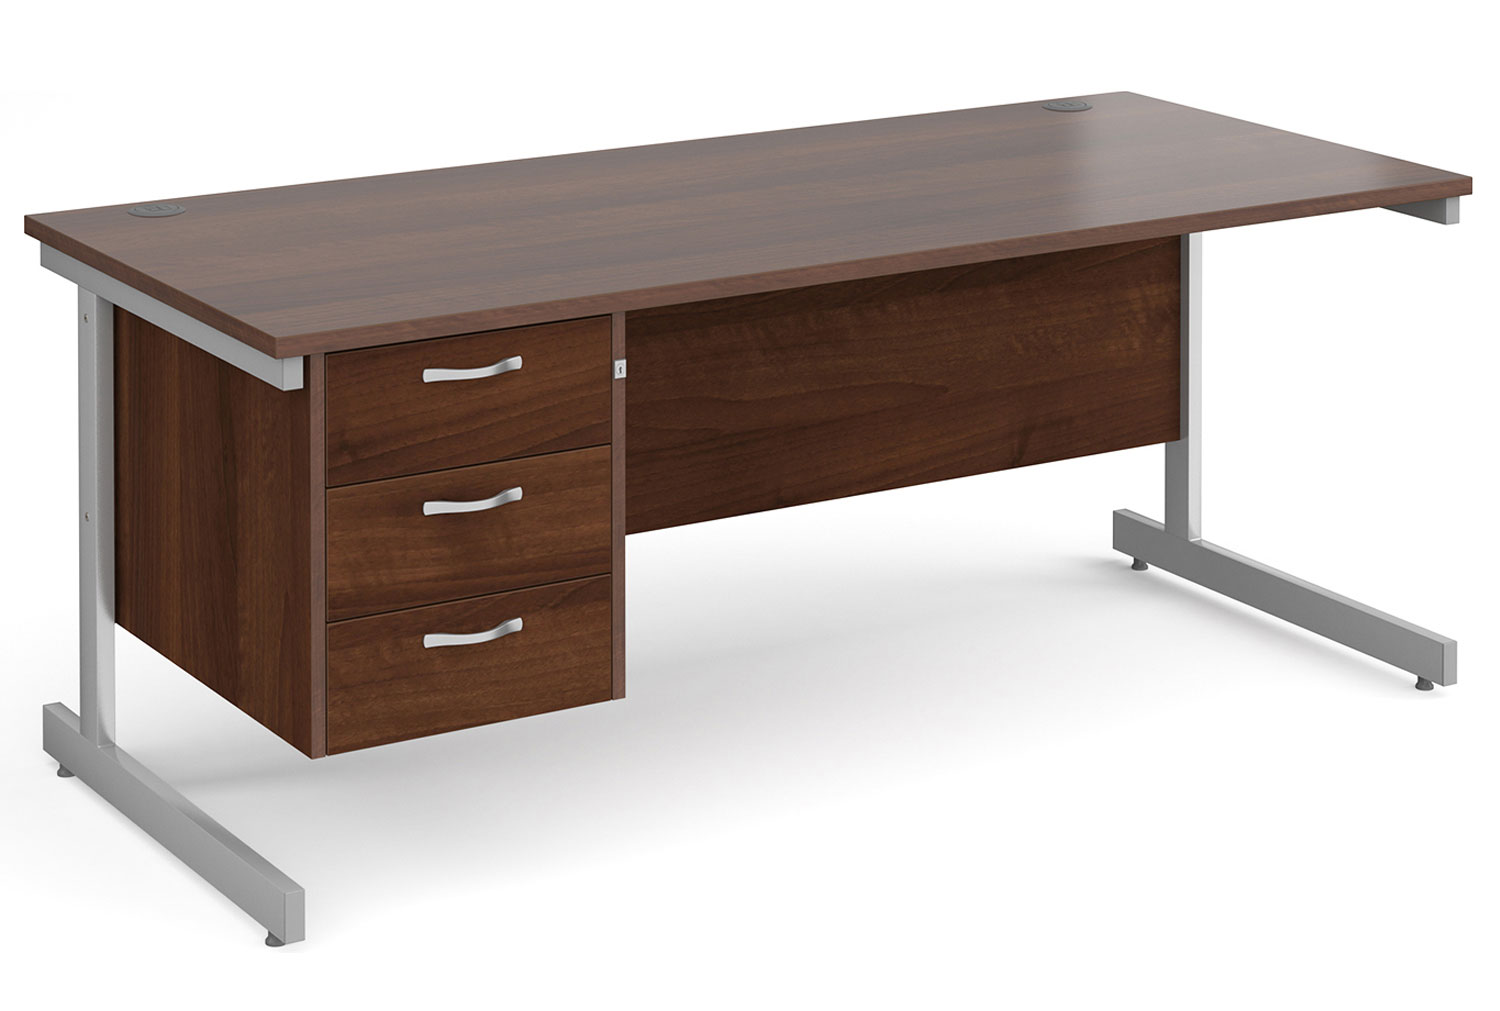 All Walnut C-Leg Clerical Office Desk 3 Drawer, 180wx80dx73h (cm), Fully Installed